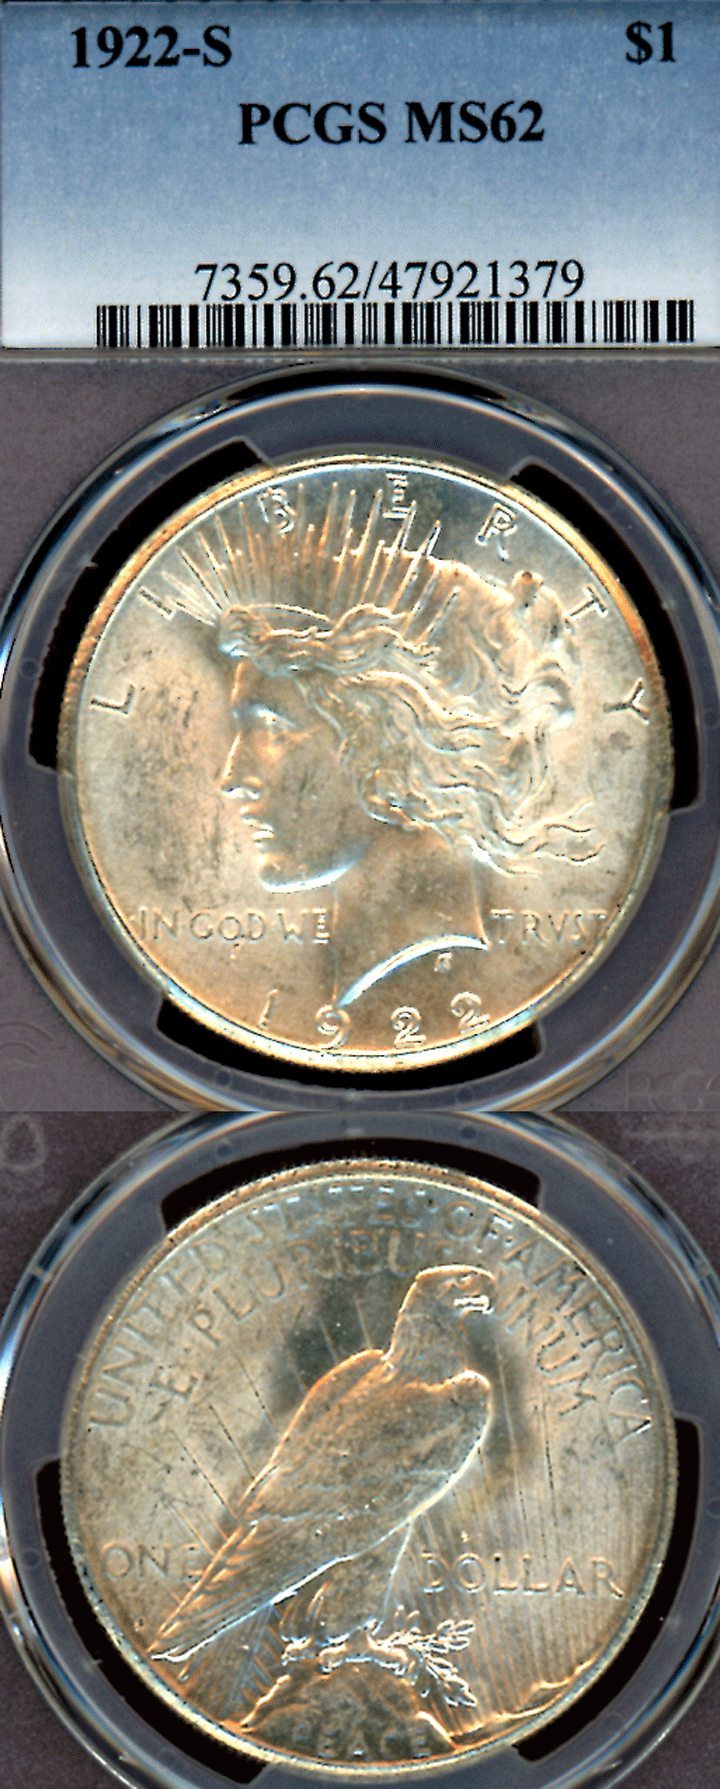 1922-S $ Peace silver dollar PCGS MS 62